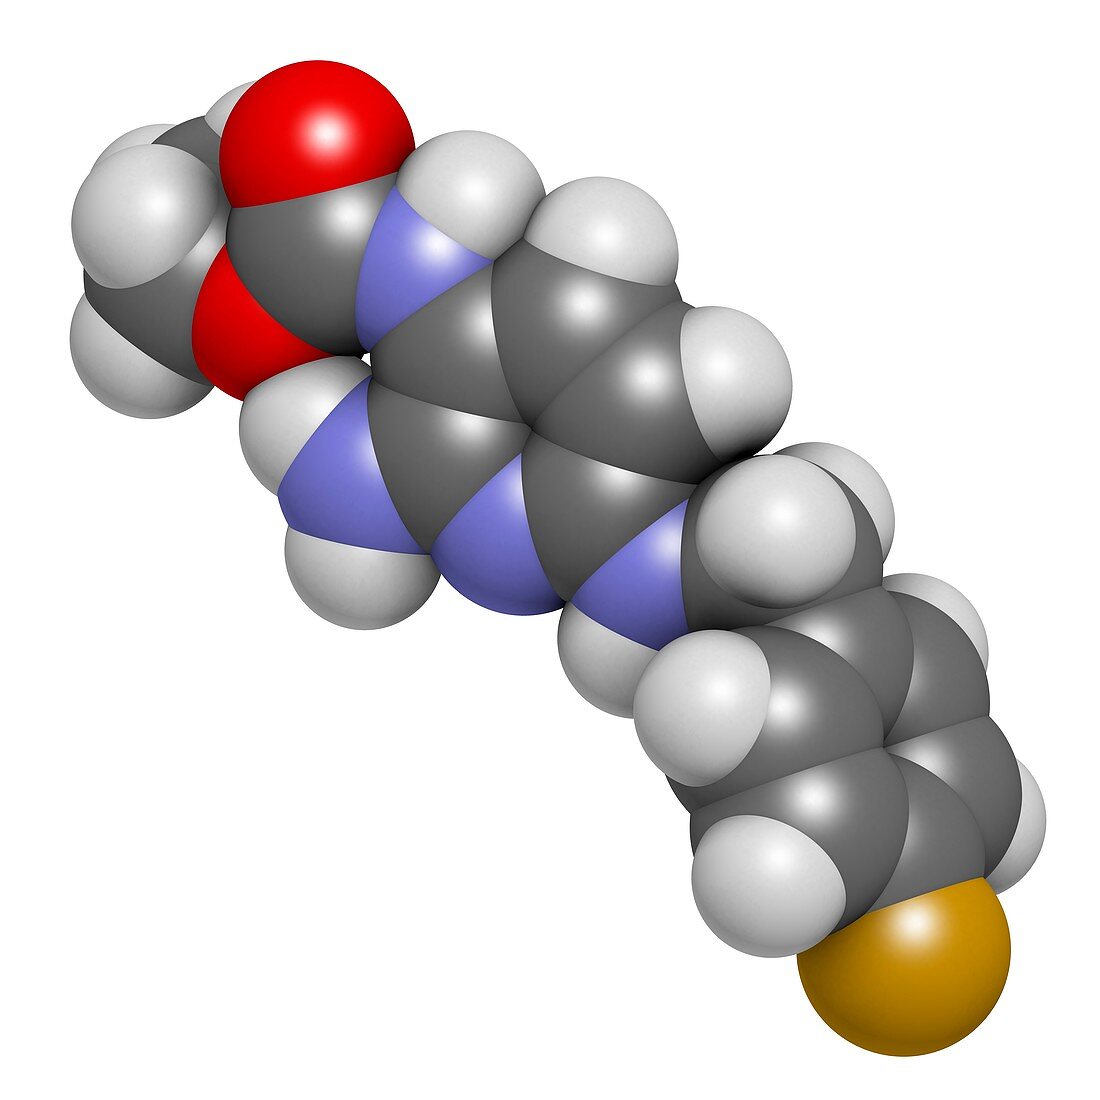 Flupirtine analgesic drug molecule